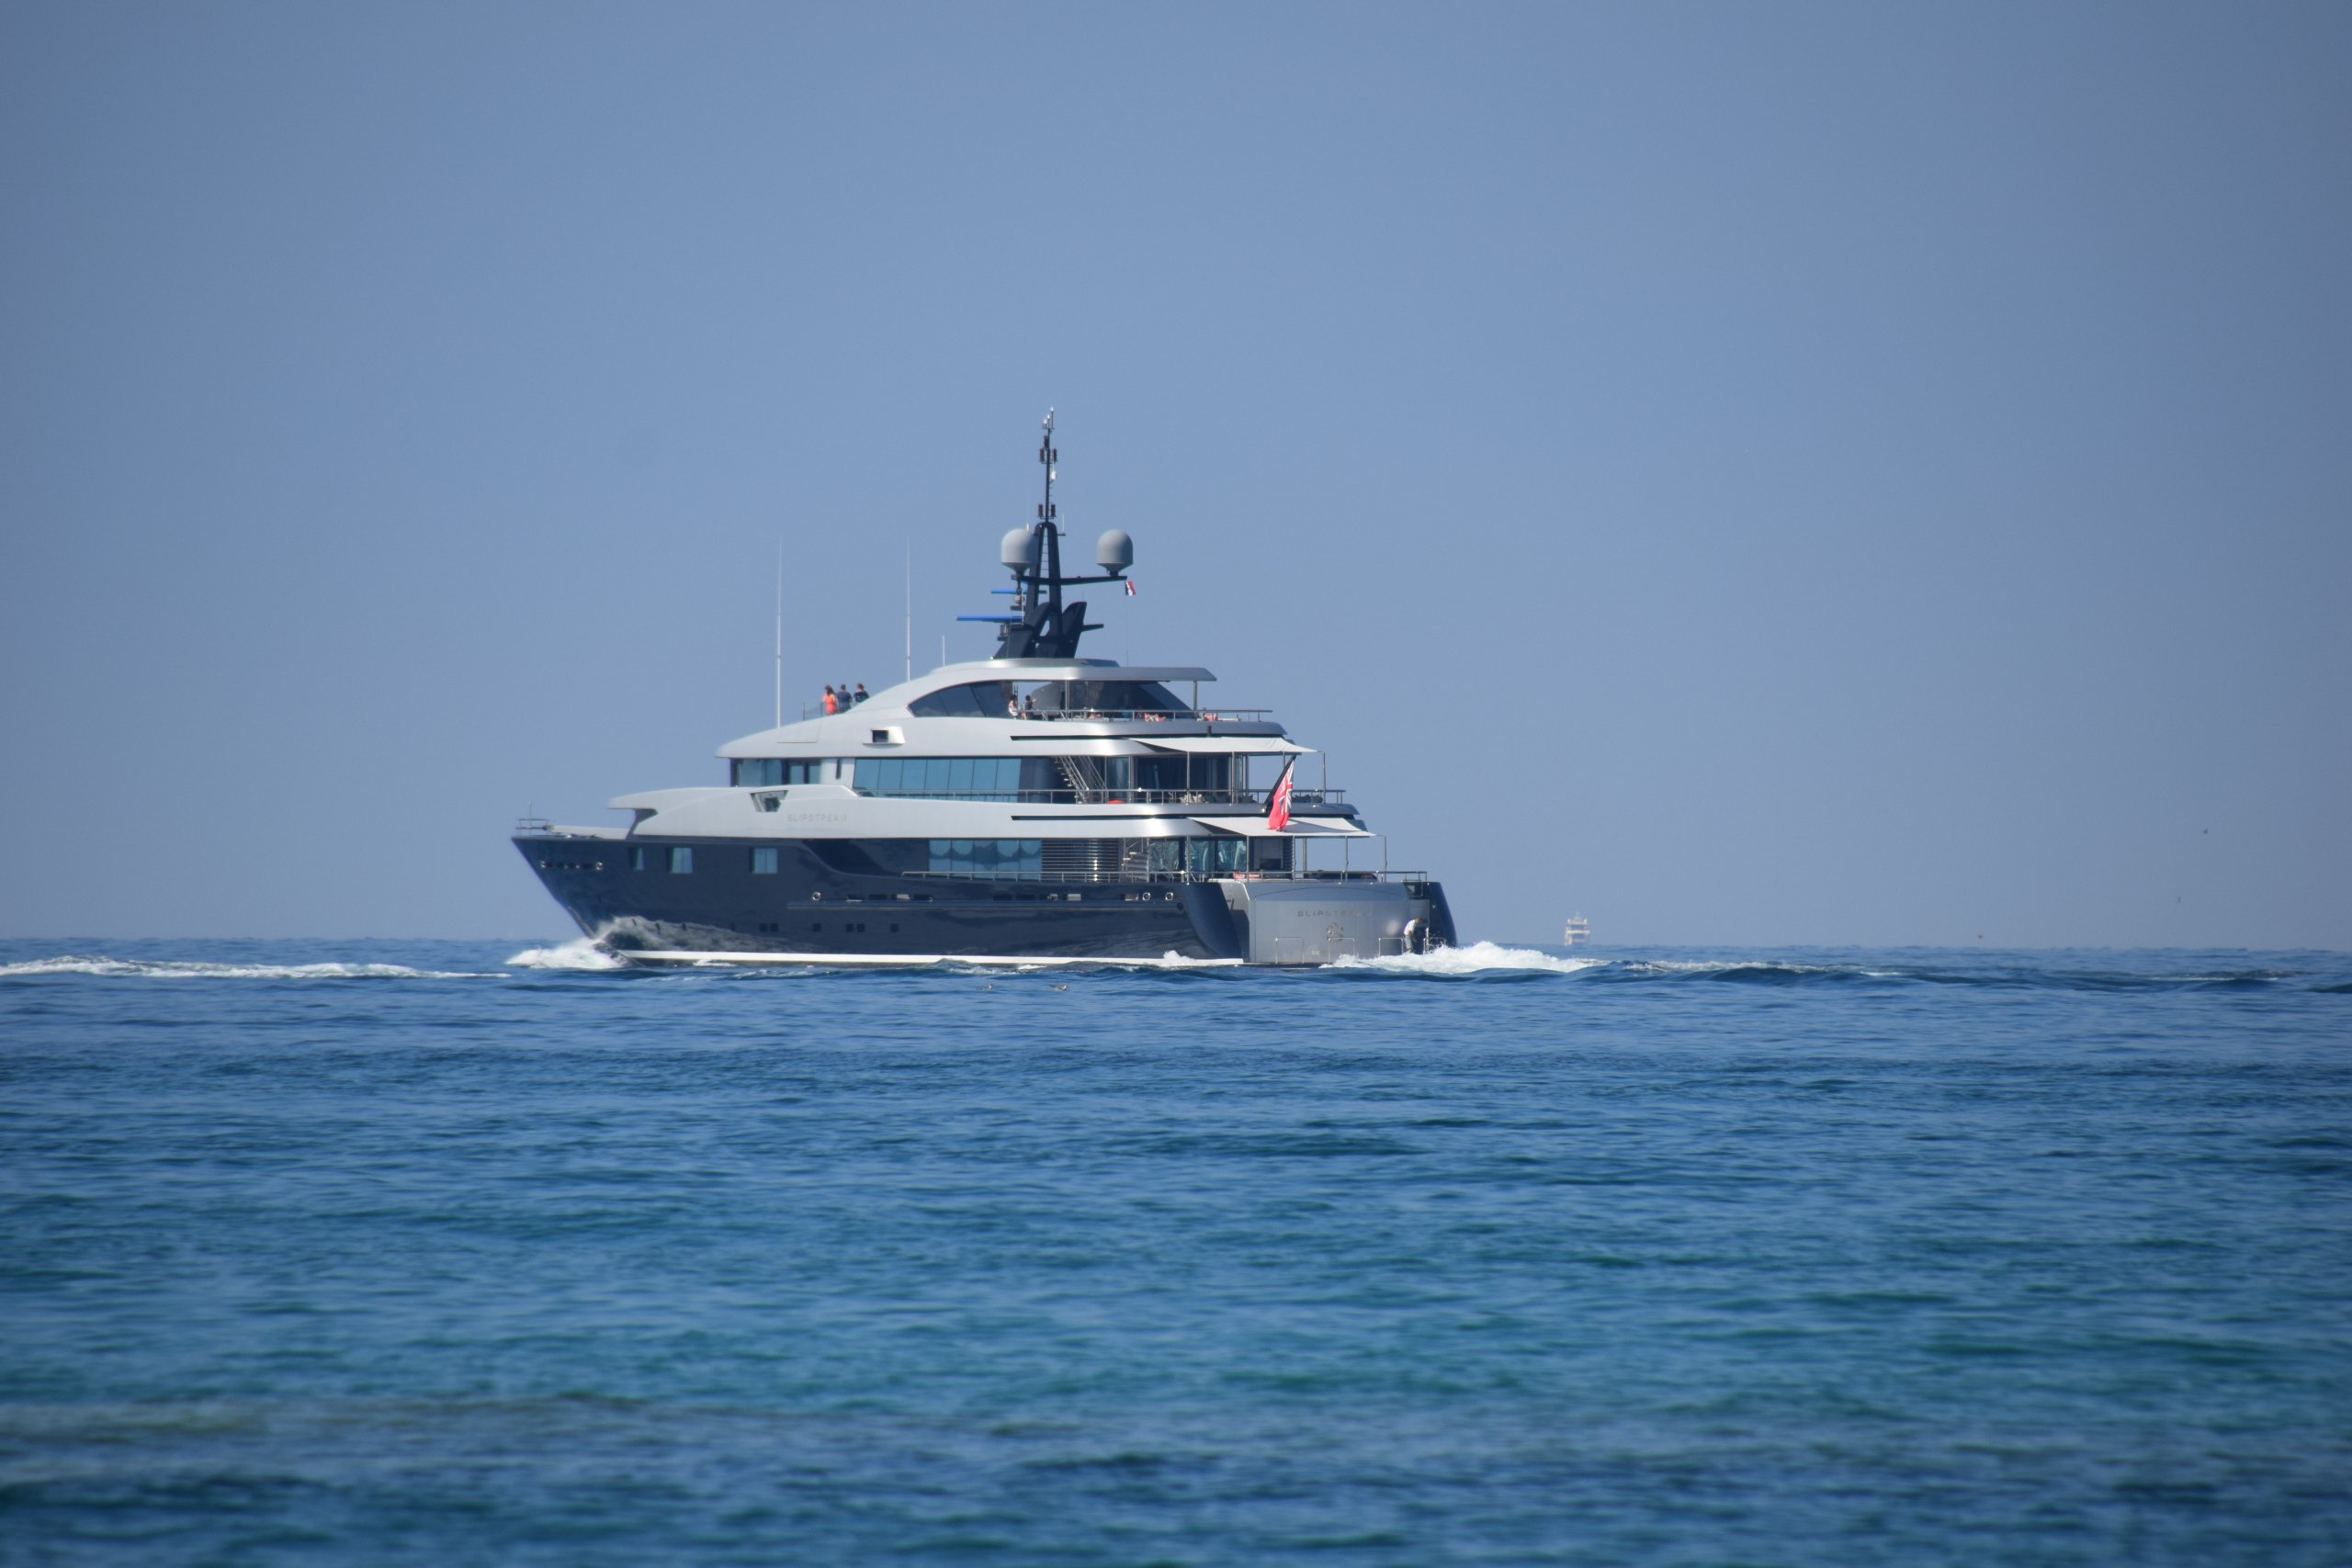 Yacht Slipstream – 60 m – CMN – Jack Cowin